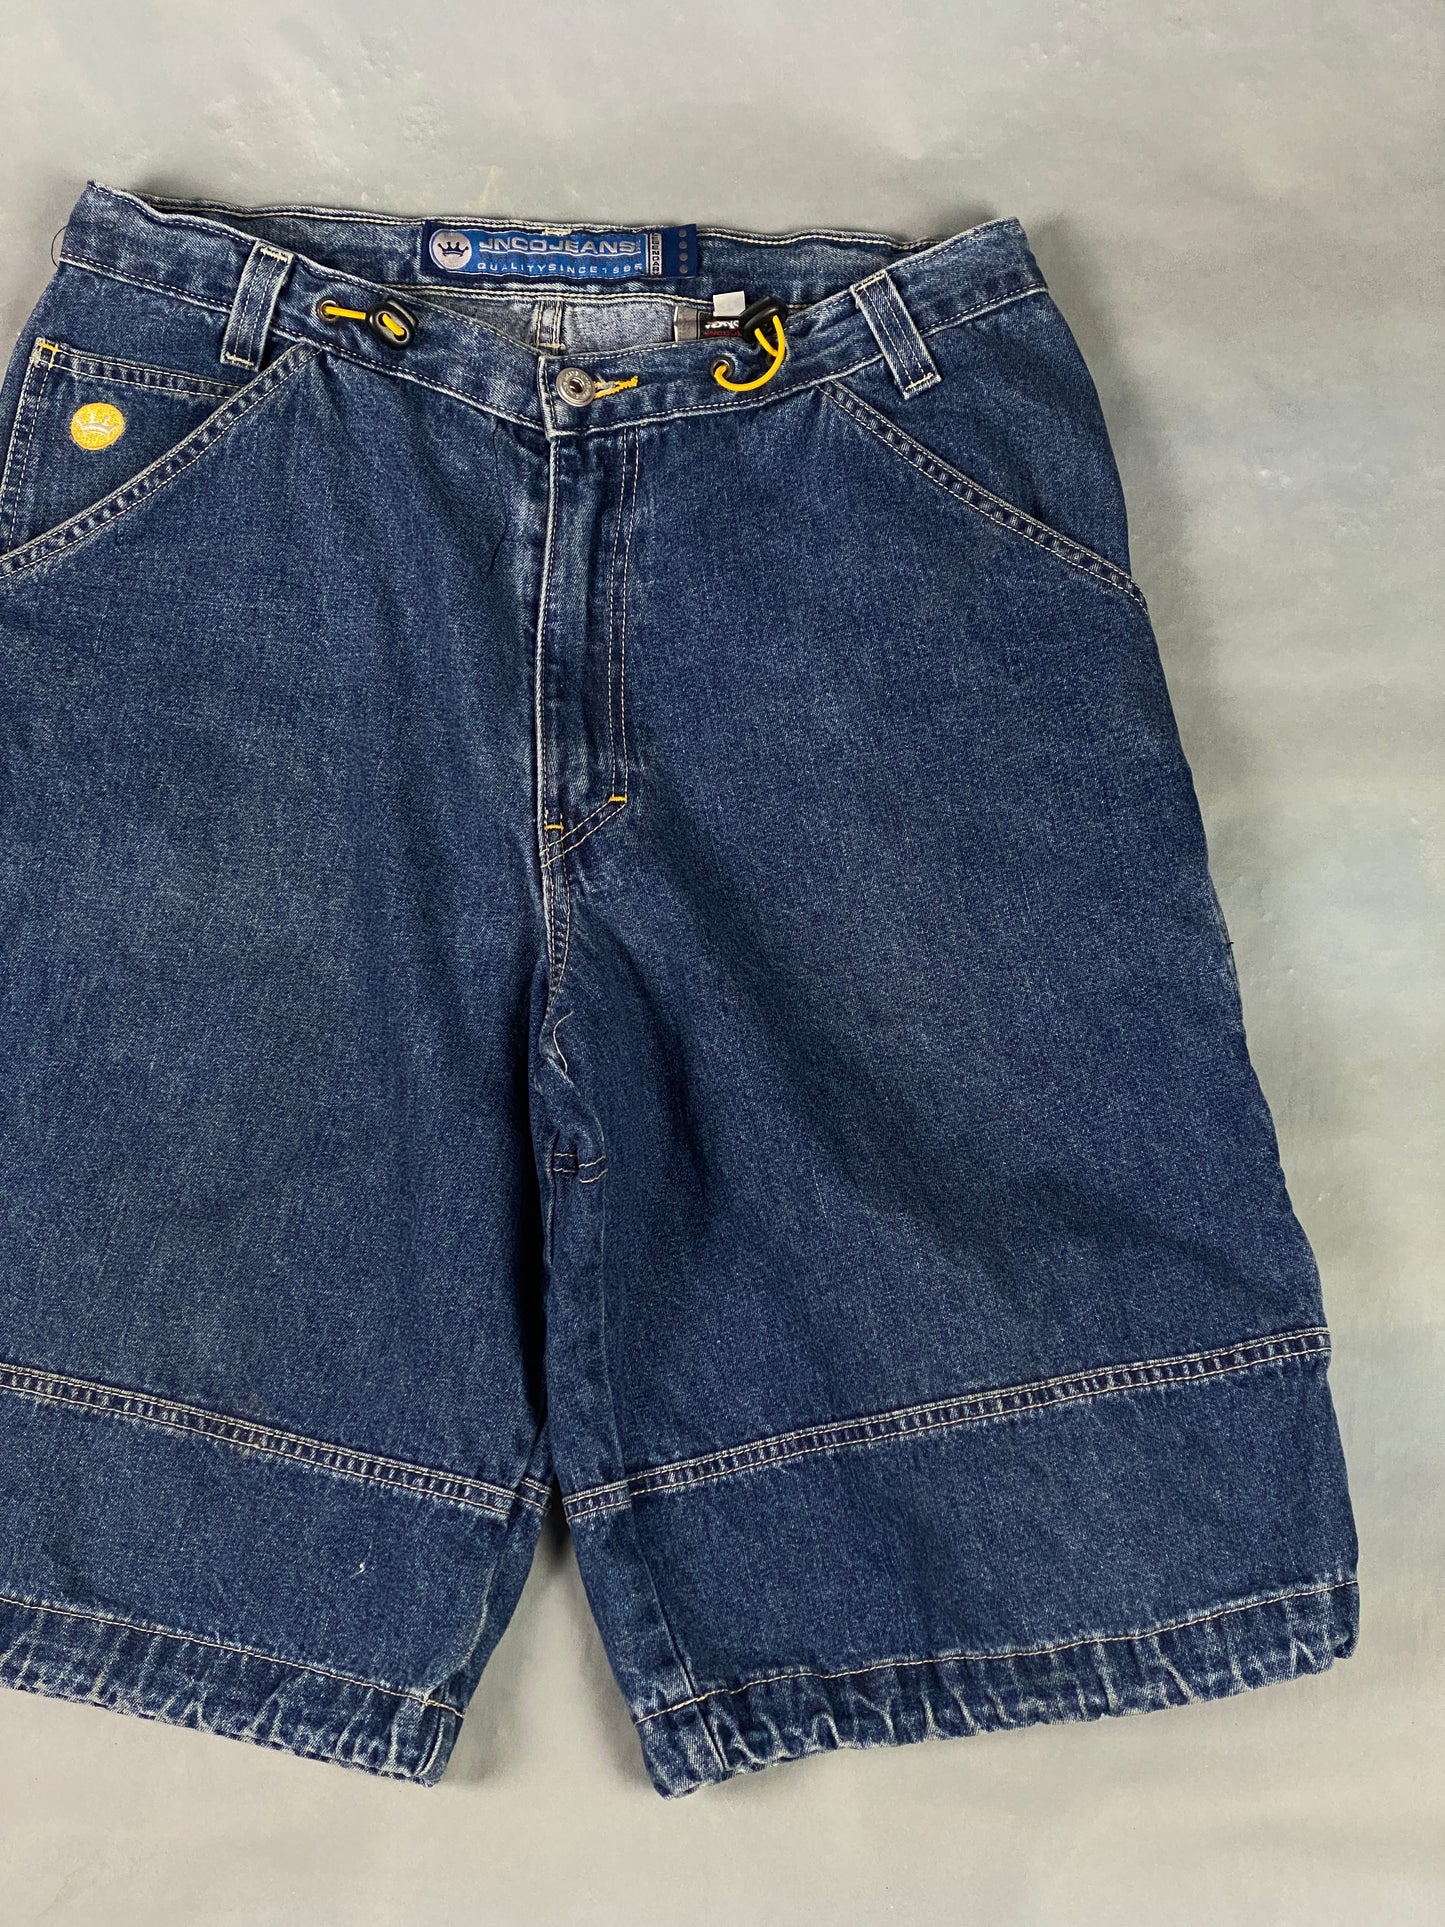 JNCO Vintage Shorts Jeans - 36